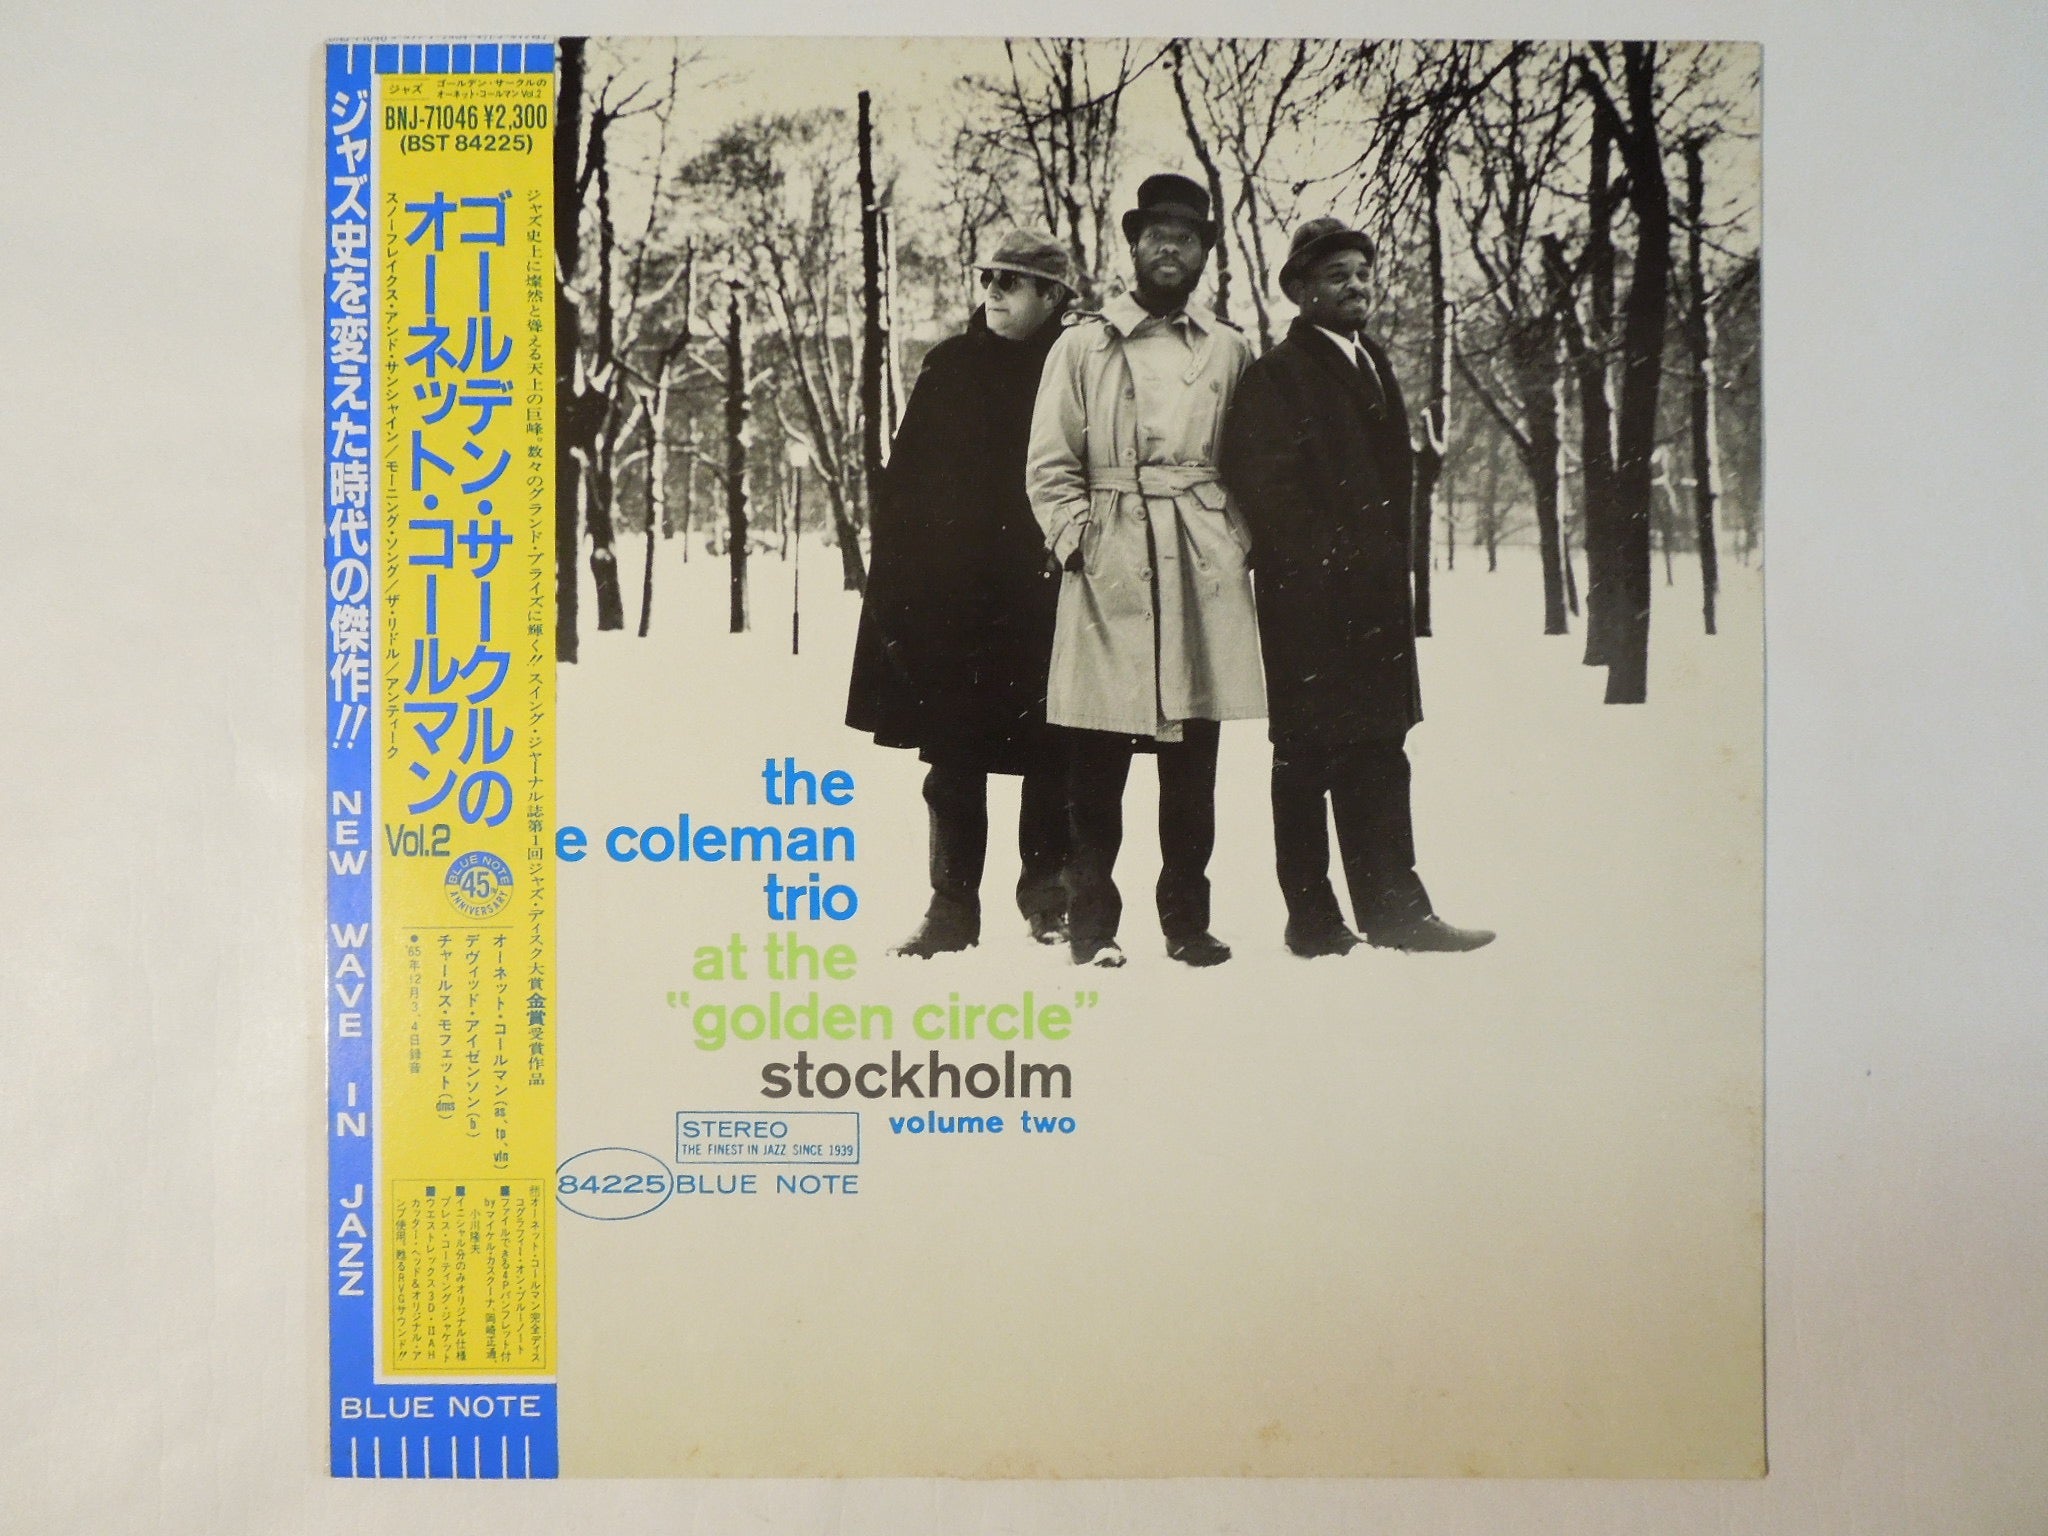 The Ornette Coleman Trio / At The 